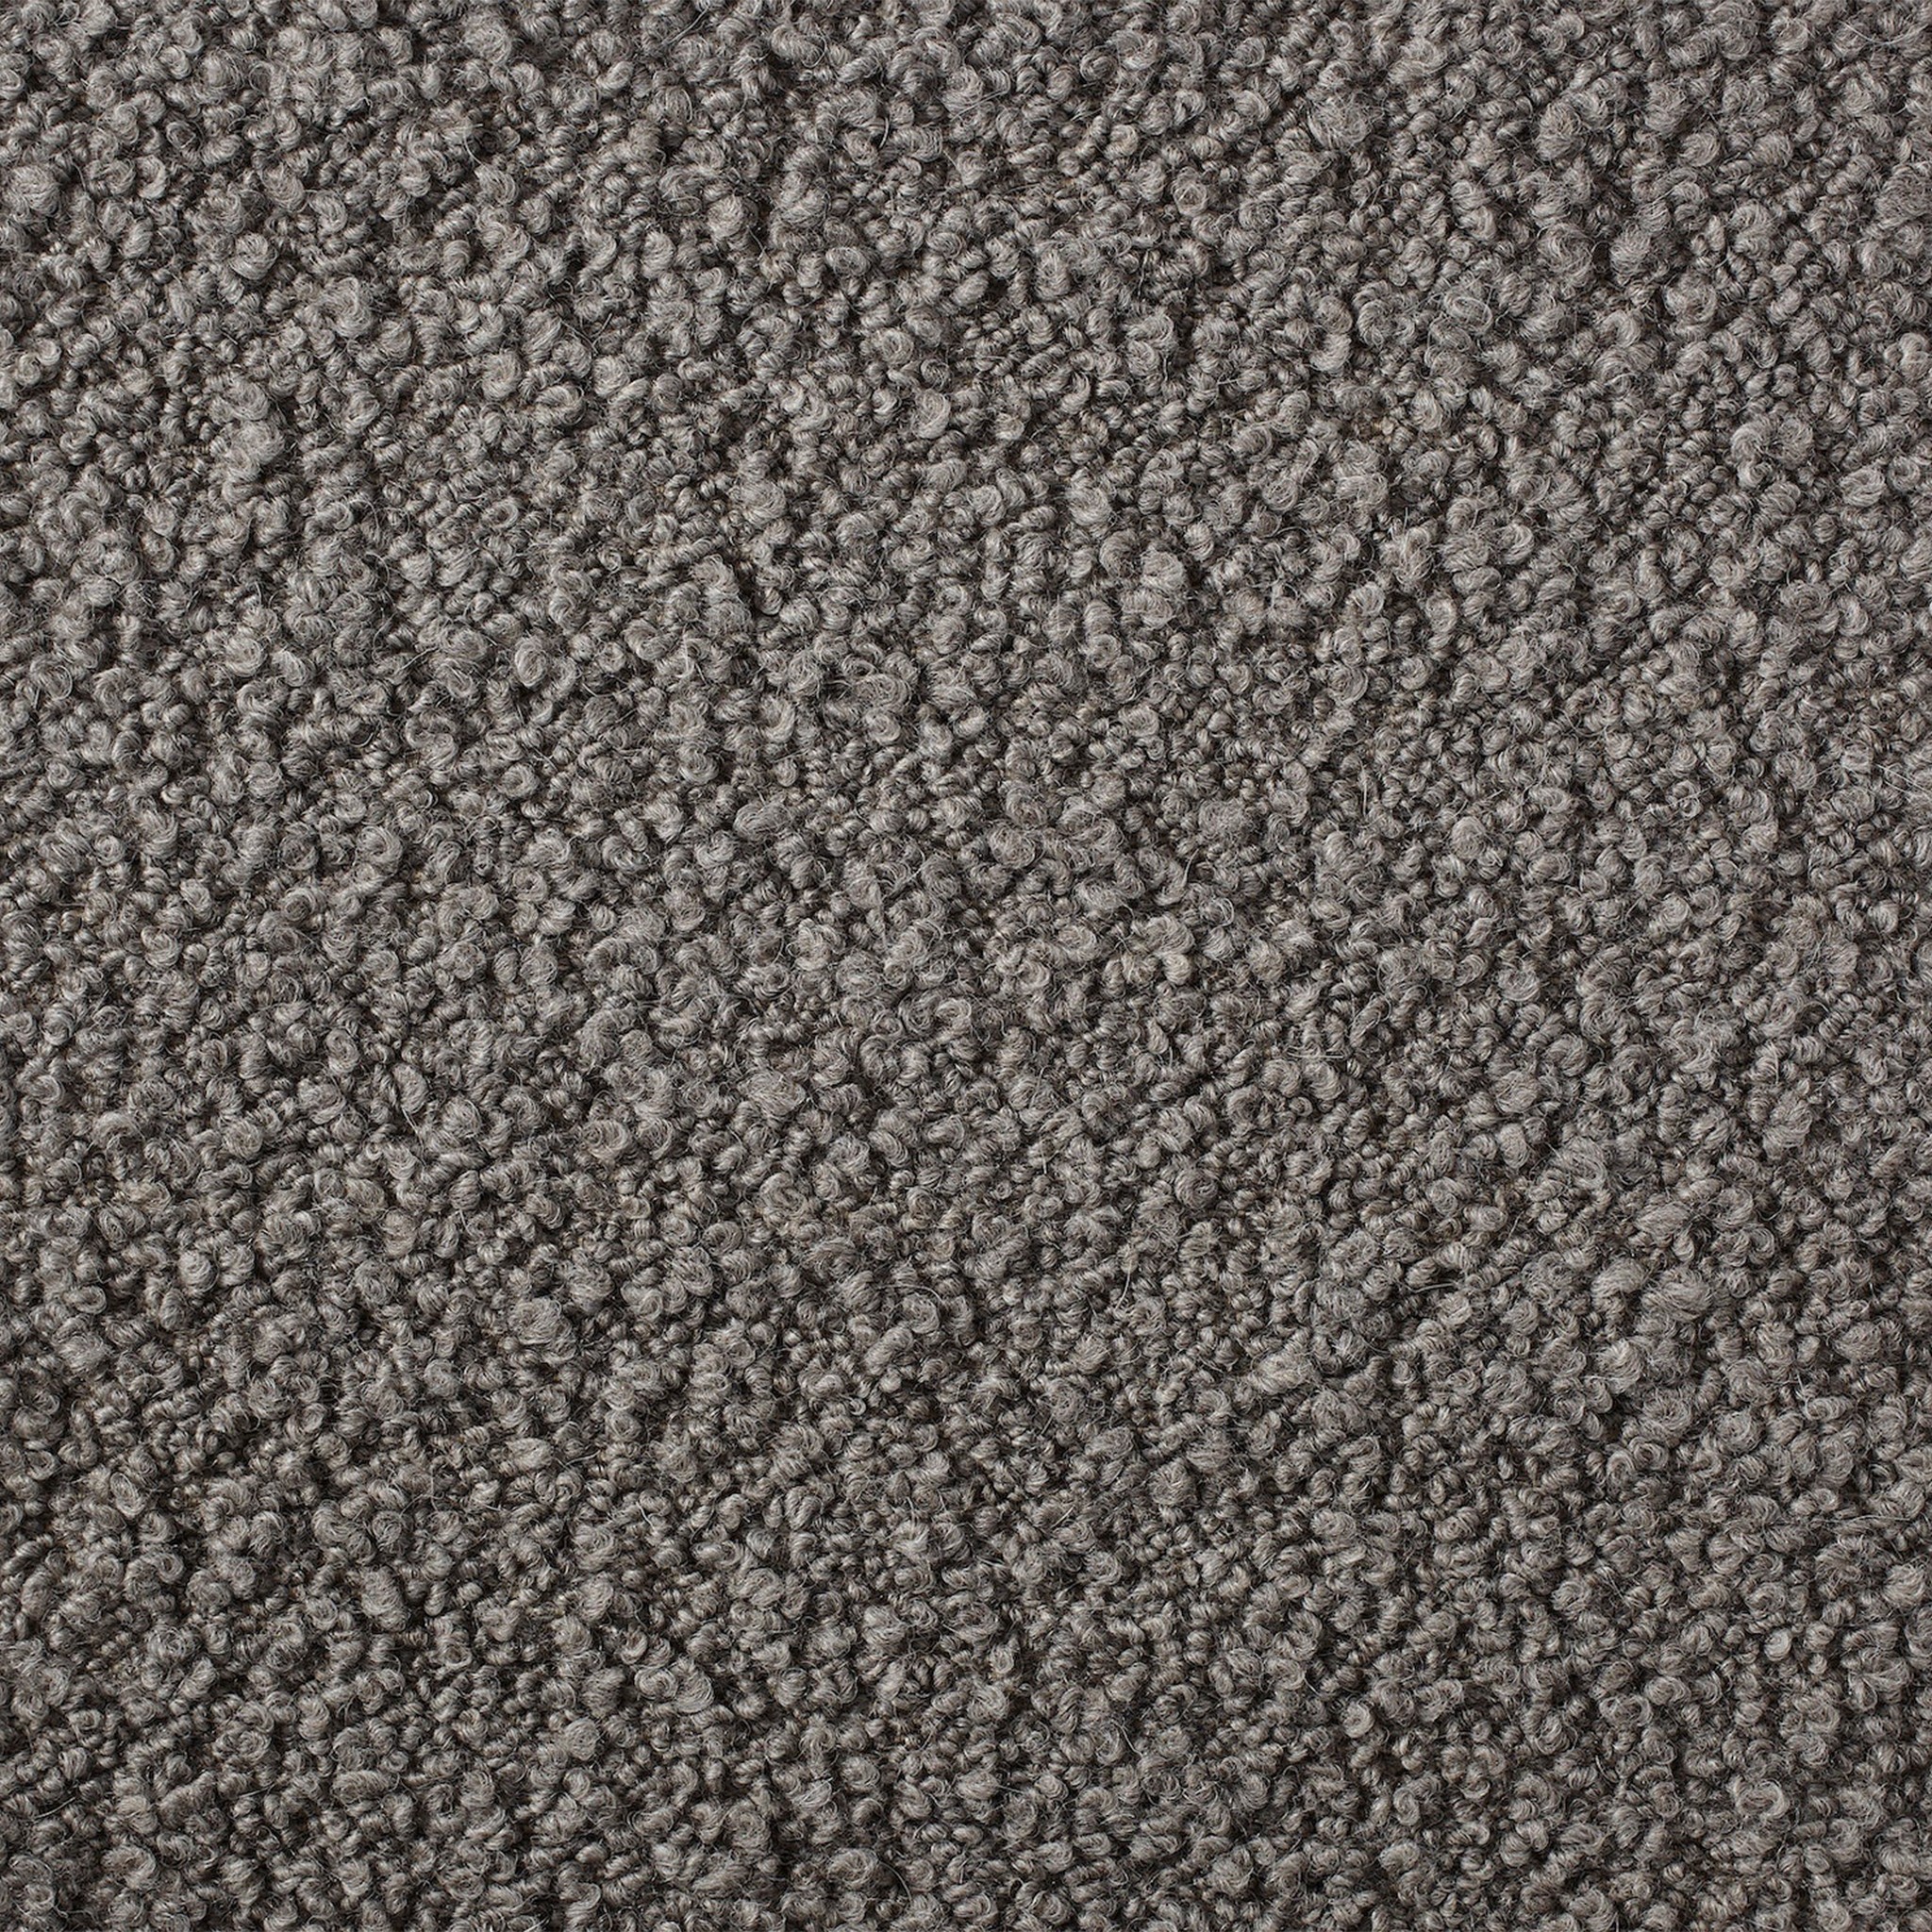 a close up view of a gray carpet